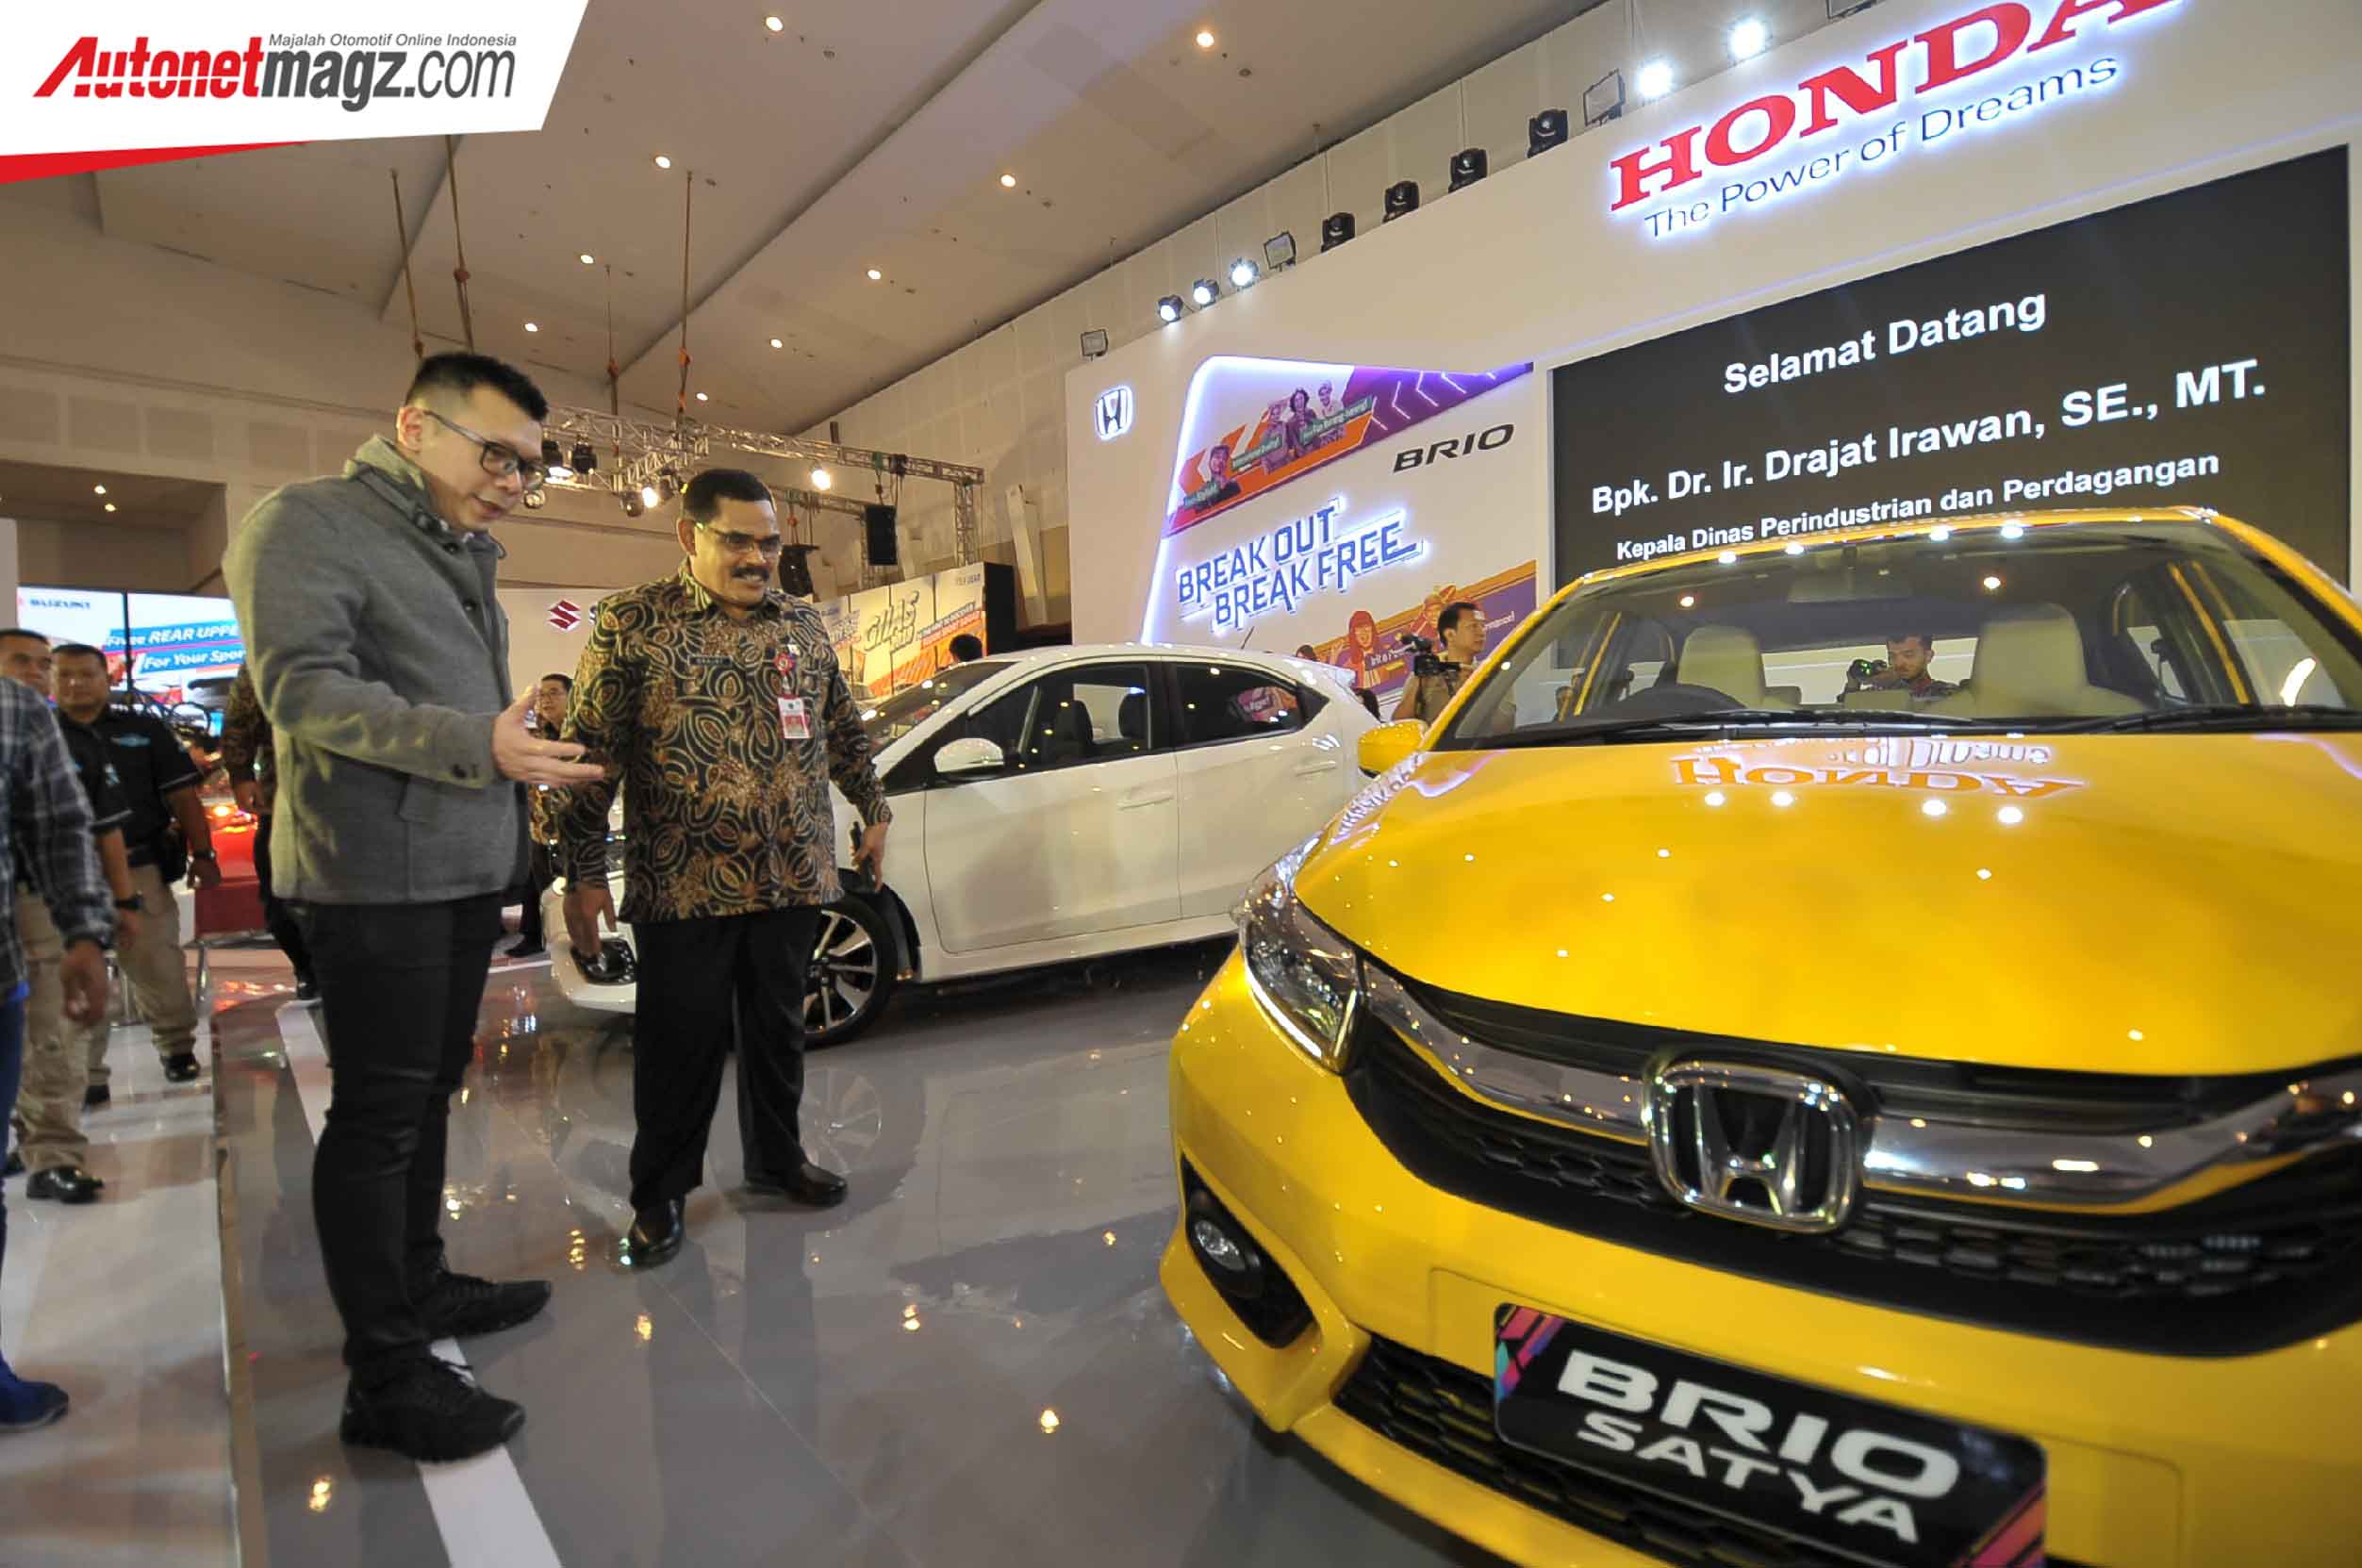 New Honda Brio GIIAS Surabaya 2018 AutonetMagz Review 